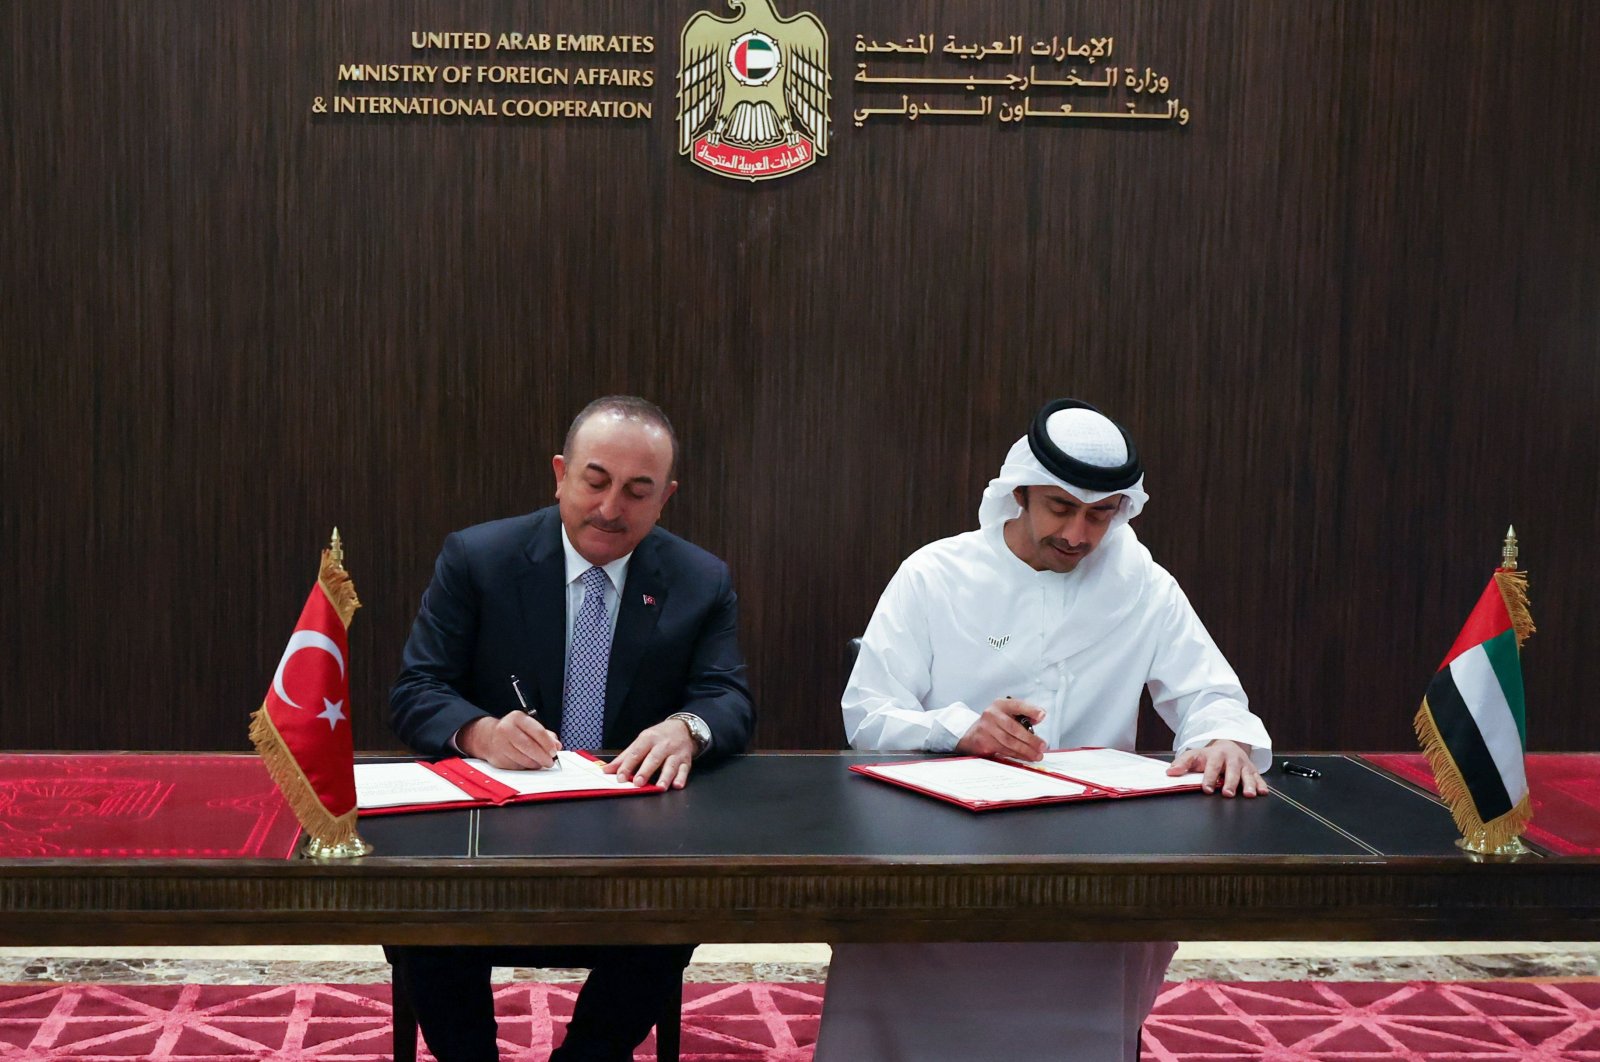 Foreign Minister Mevlüt Çavuşoğlu (L) and his UAE counterpart Sheikh Abdullah bin Zayed Al Nahyan sign a memorandum of understanding in Abu Dhabi, UAE, Dec. 15, 2021. (AFP Photo)